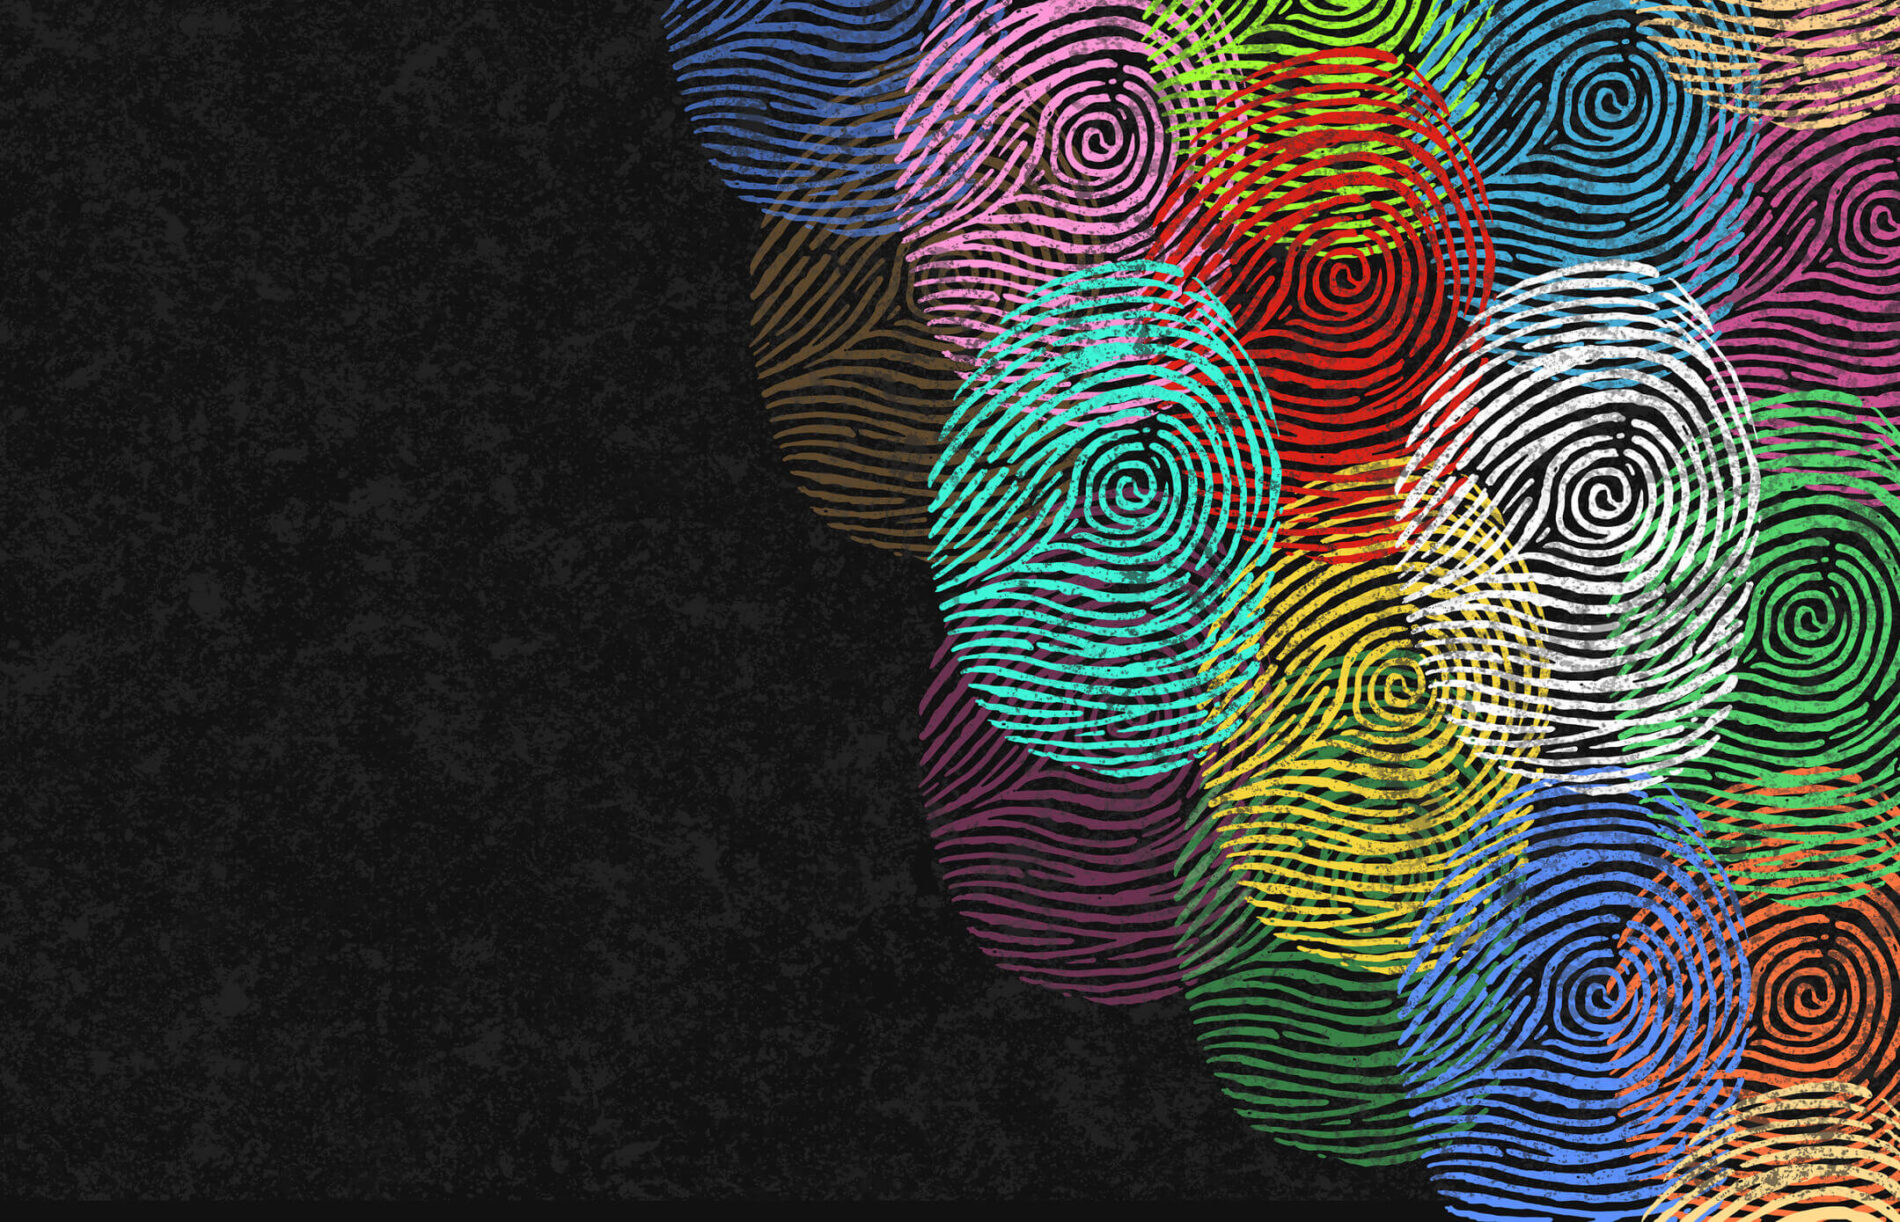 Pattern of fingerprints of different colors